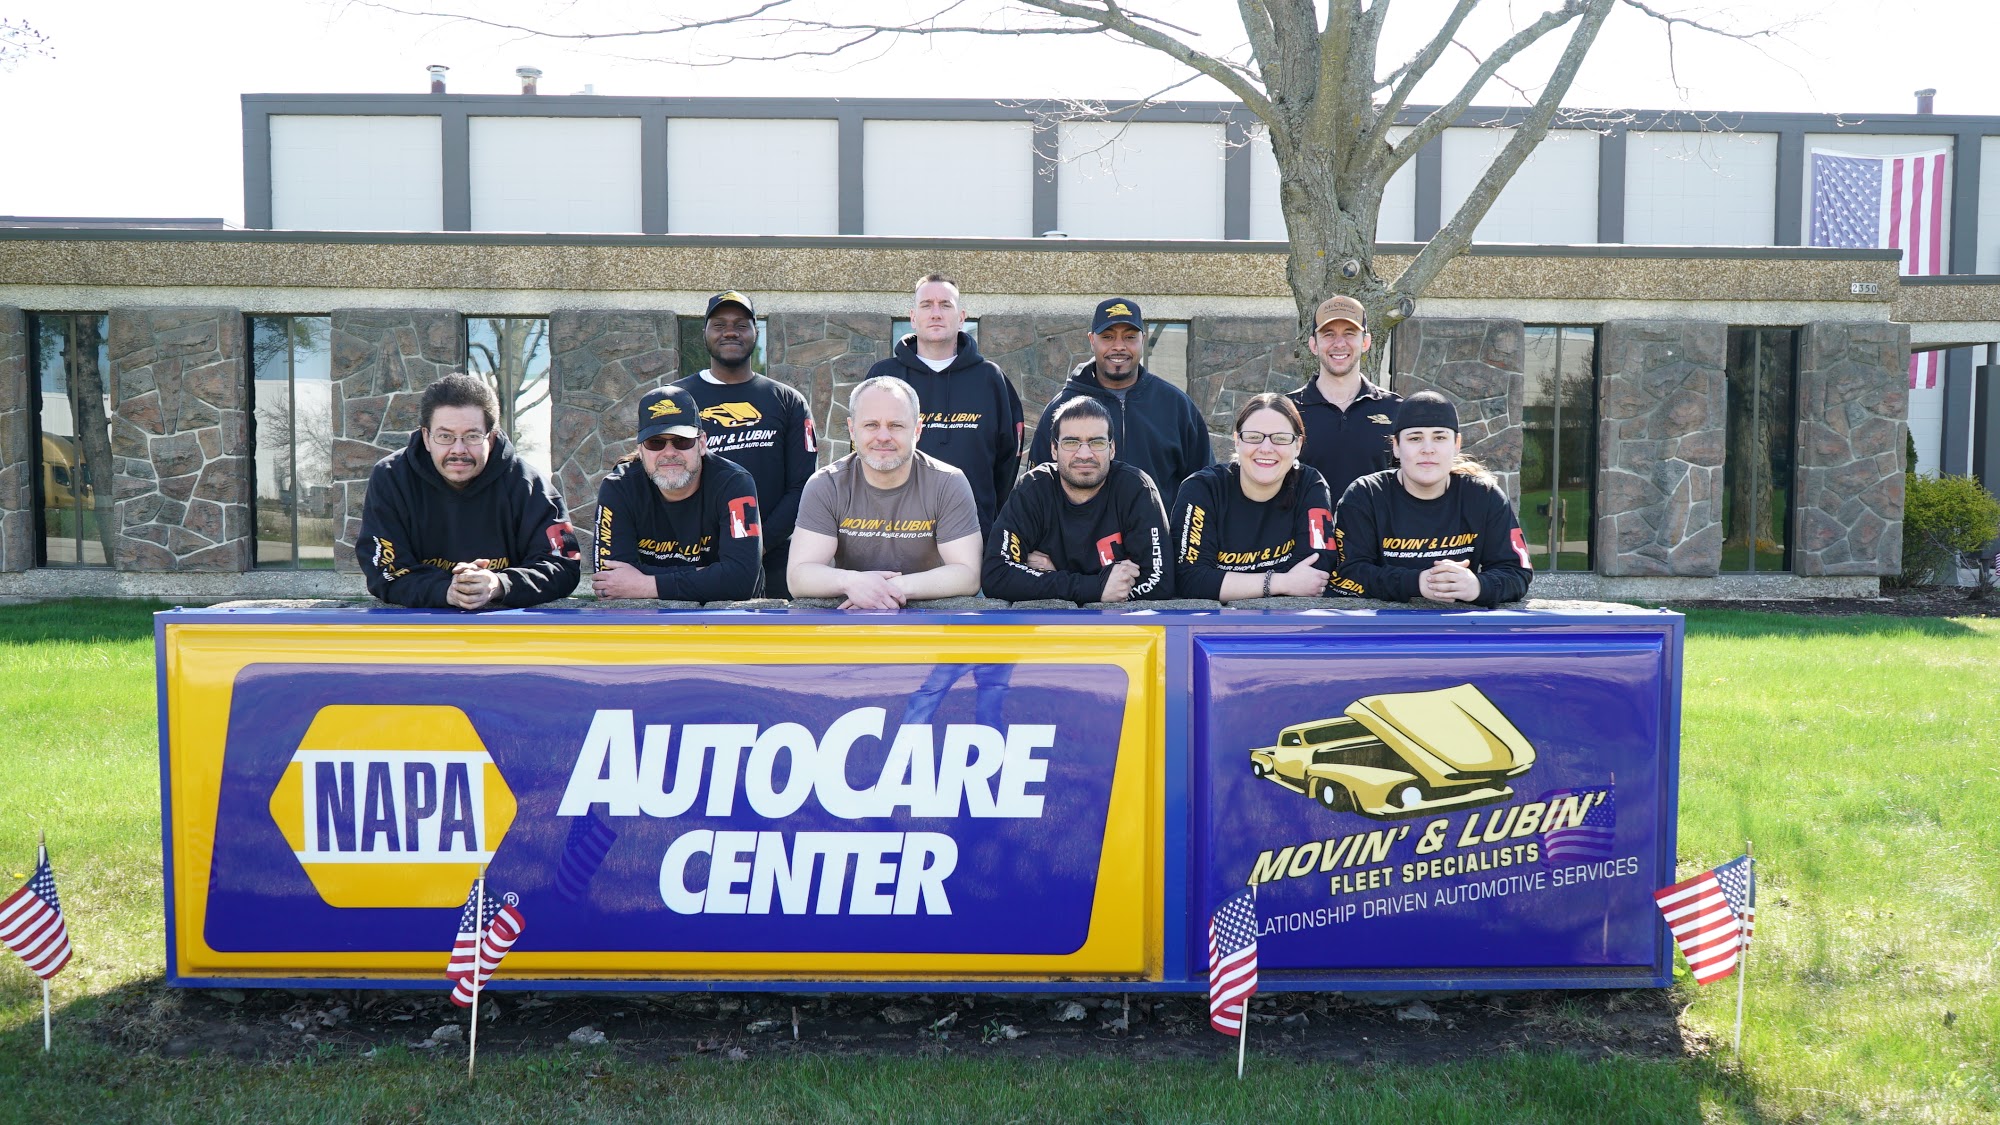 Movin' & Lubin', LLC Auto Repair Fleet Repair Shop Mechanics Brakes Service